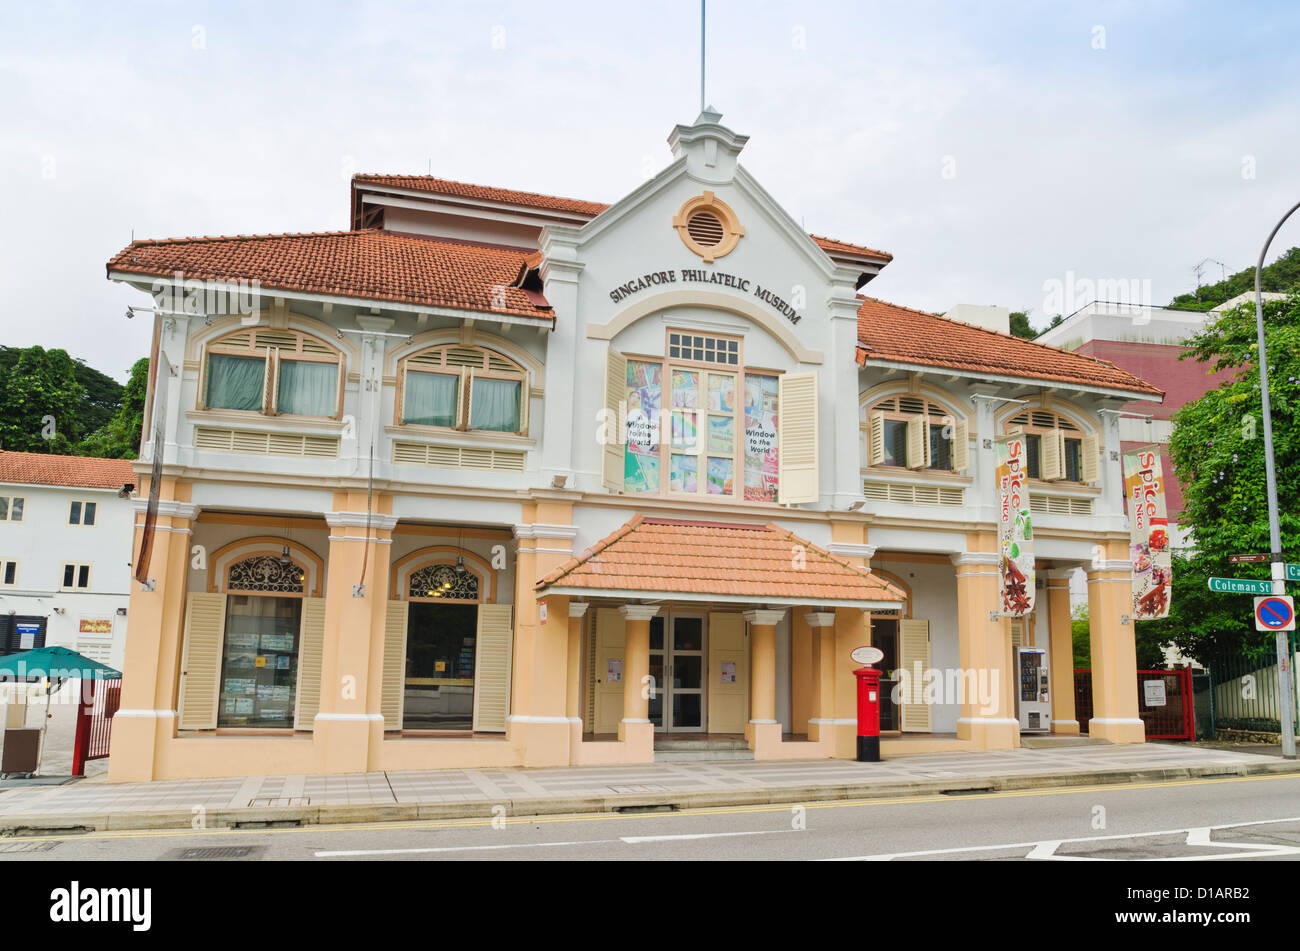 Singapore Philatelic Museum in Singapore Stock Photo